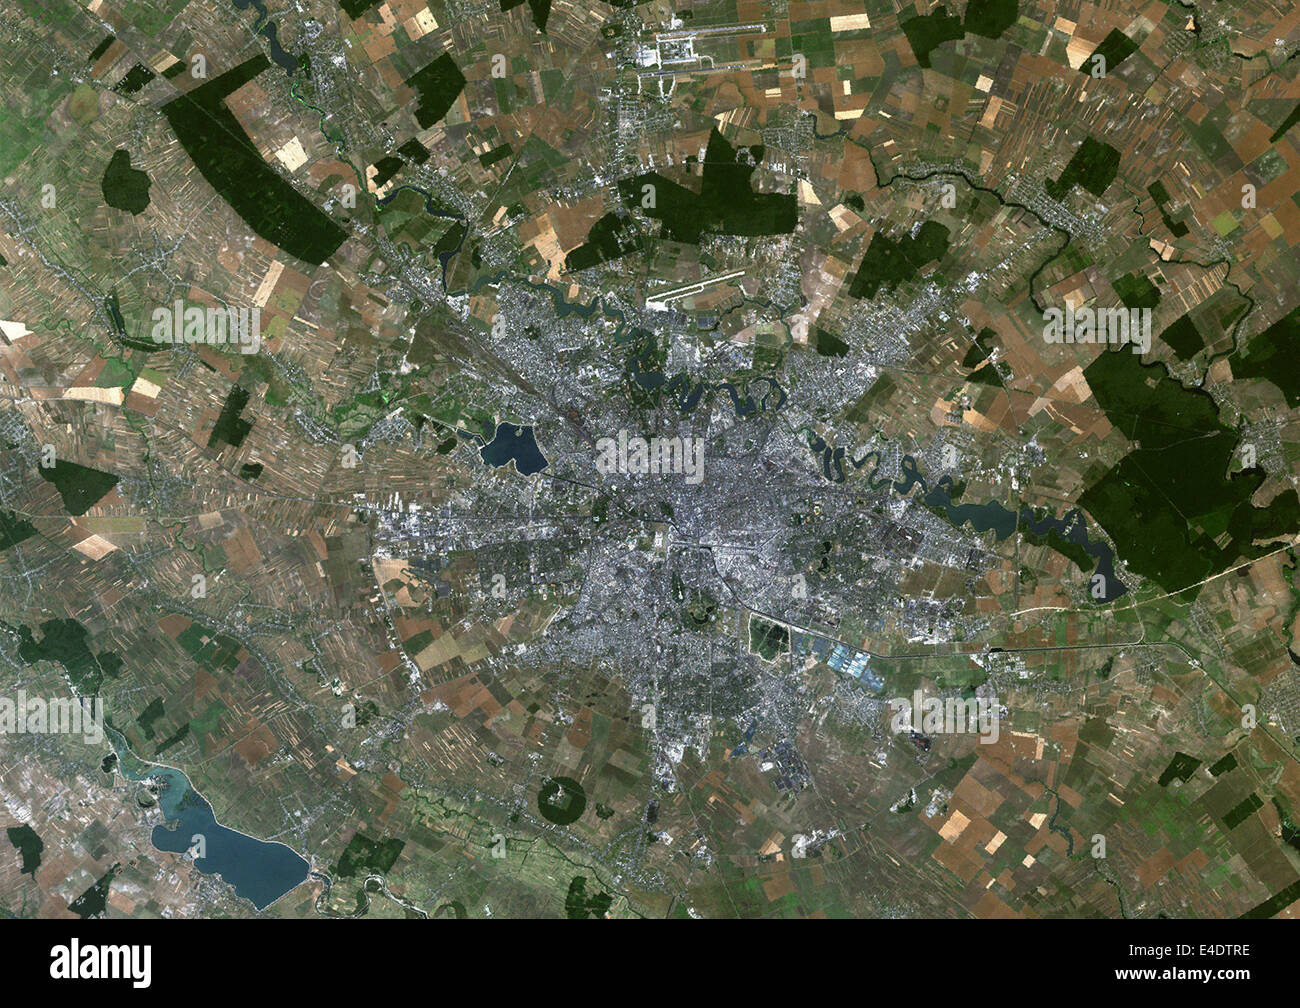 Bucarest, Romania, True Color satellitare immagine. A Bucarest, Romania. True color satellitare immagine di Bucarest, la città capitale di Roma Foto Stock